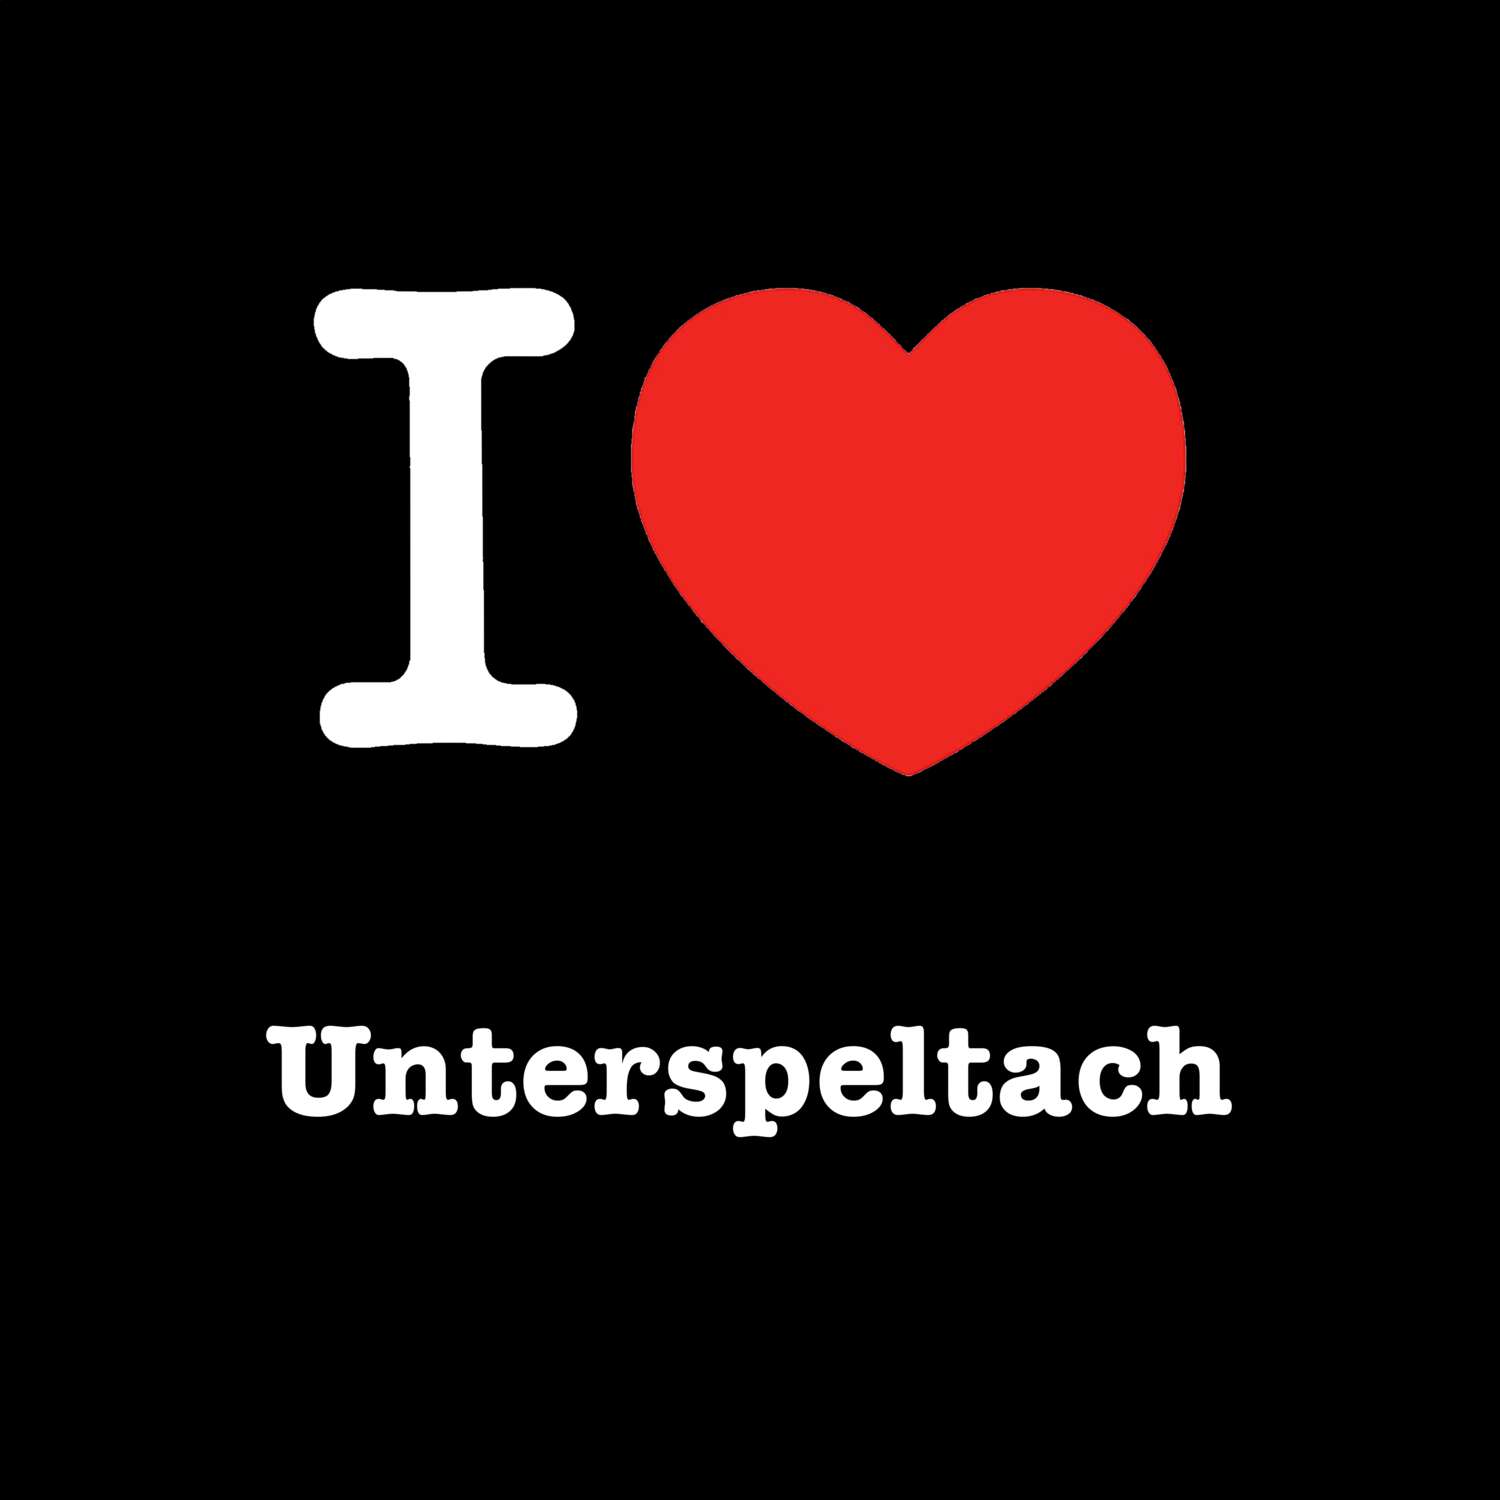 Unterspeltach T-Shirt »I love«